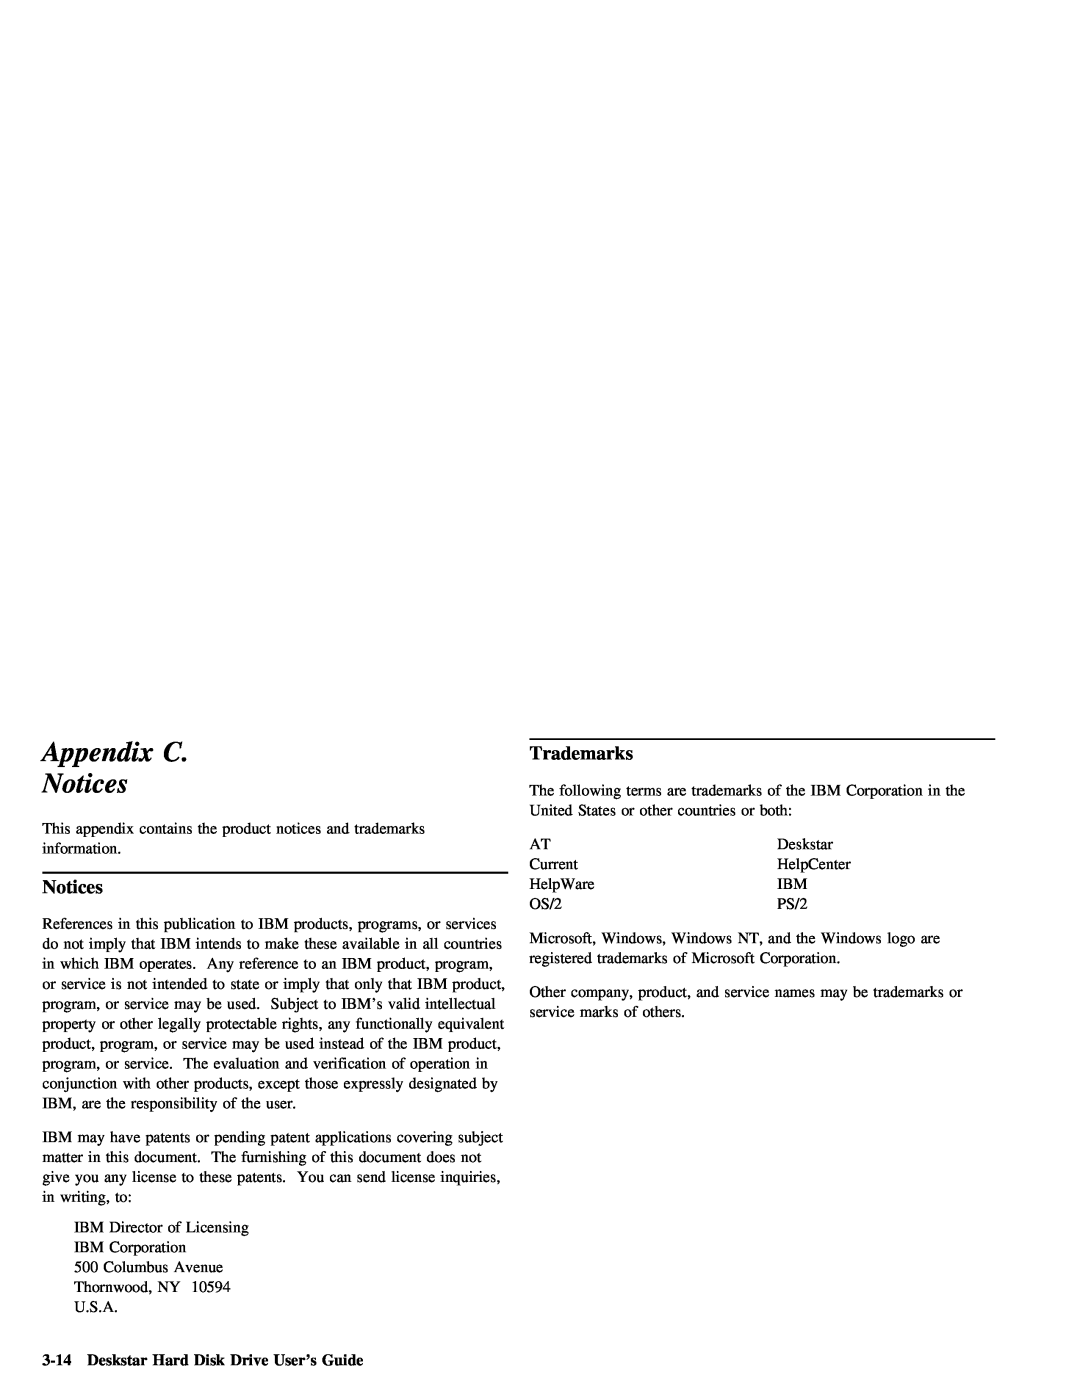 IBM ATA-3 manual Appendix C Notices, Trademarks, Deskstar Hard Disk Drive User’s Guide 